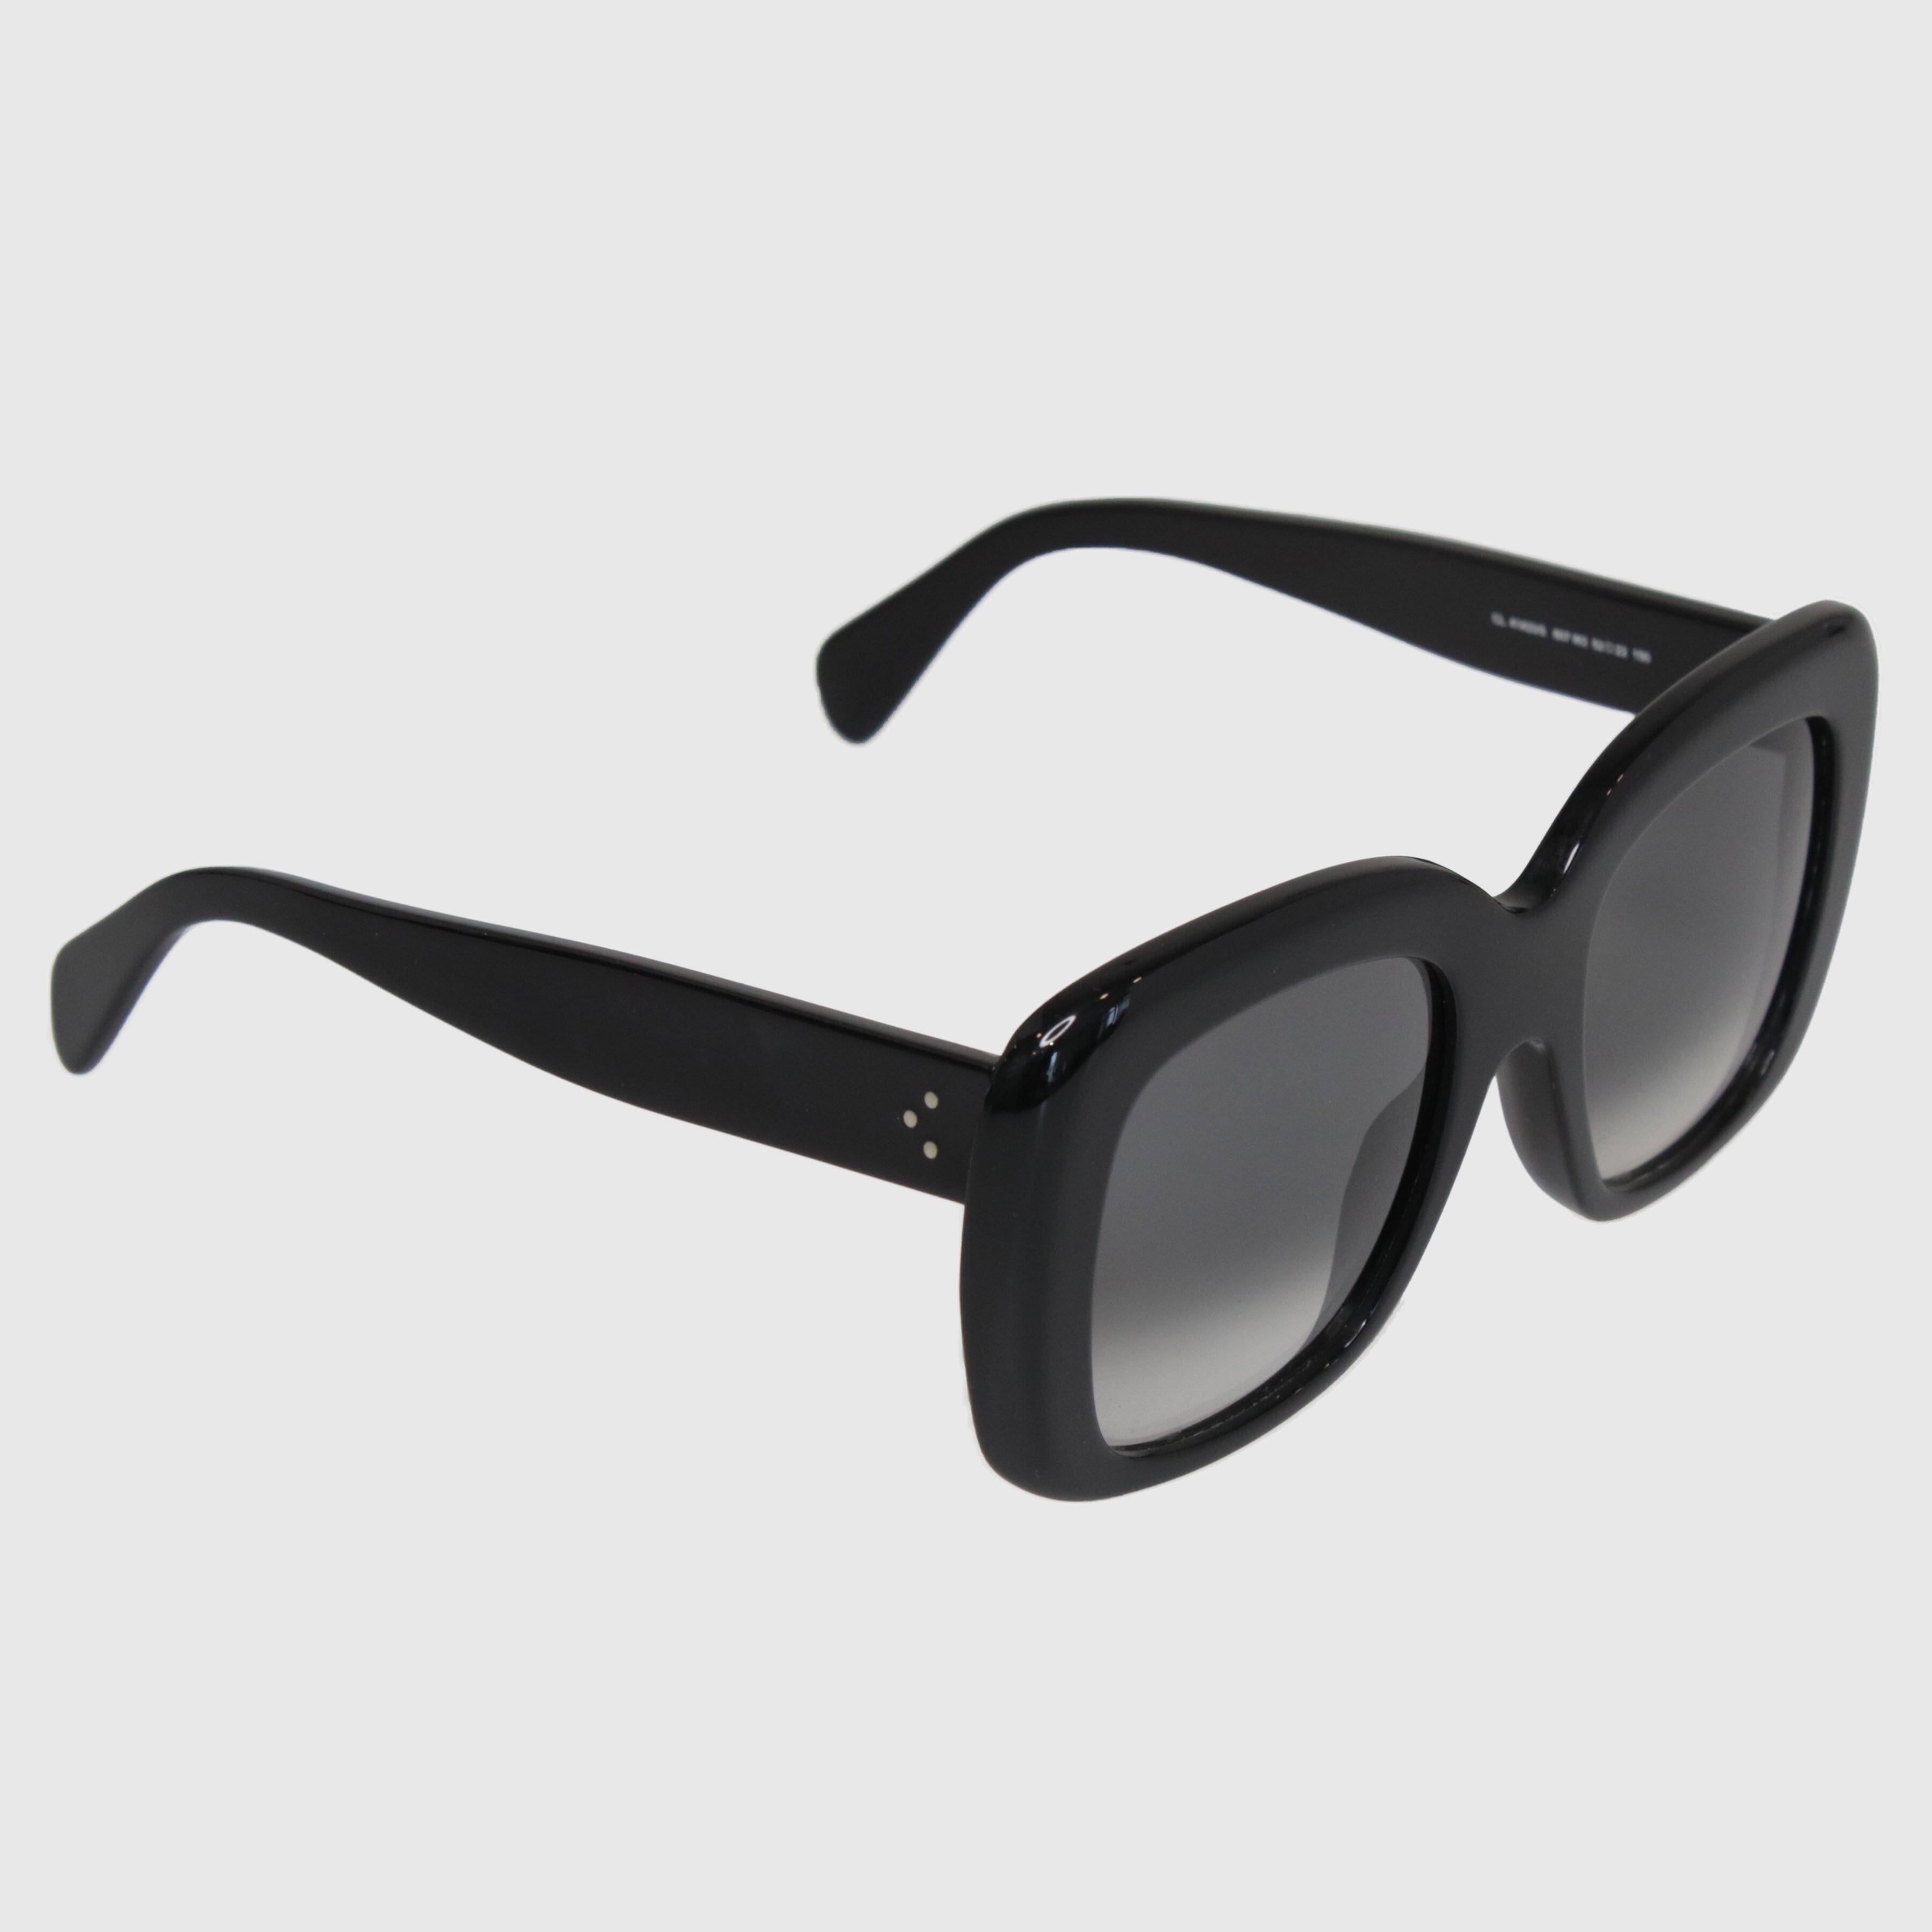 Black Oversized Square Frame Sunglasses - CL 41433/S